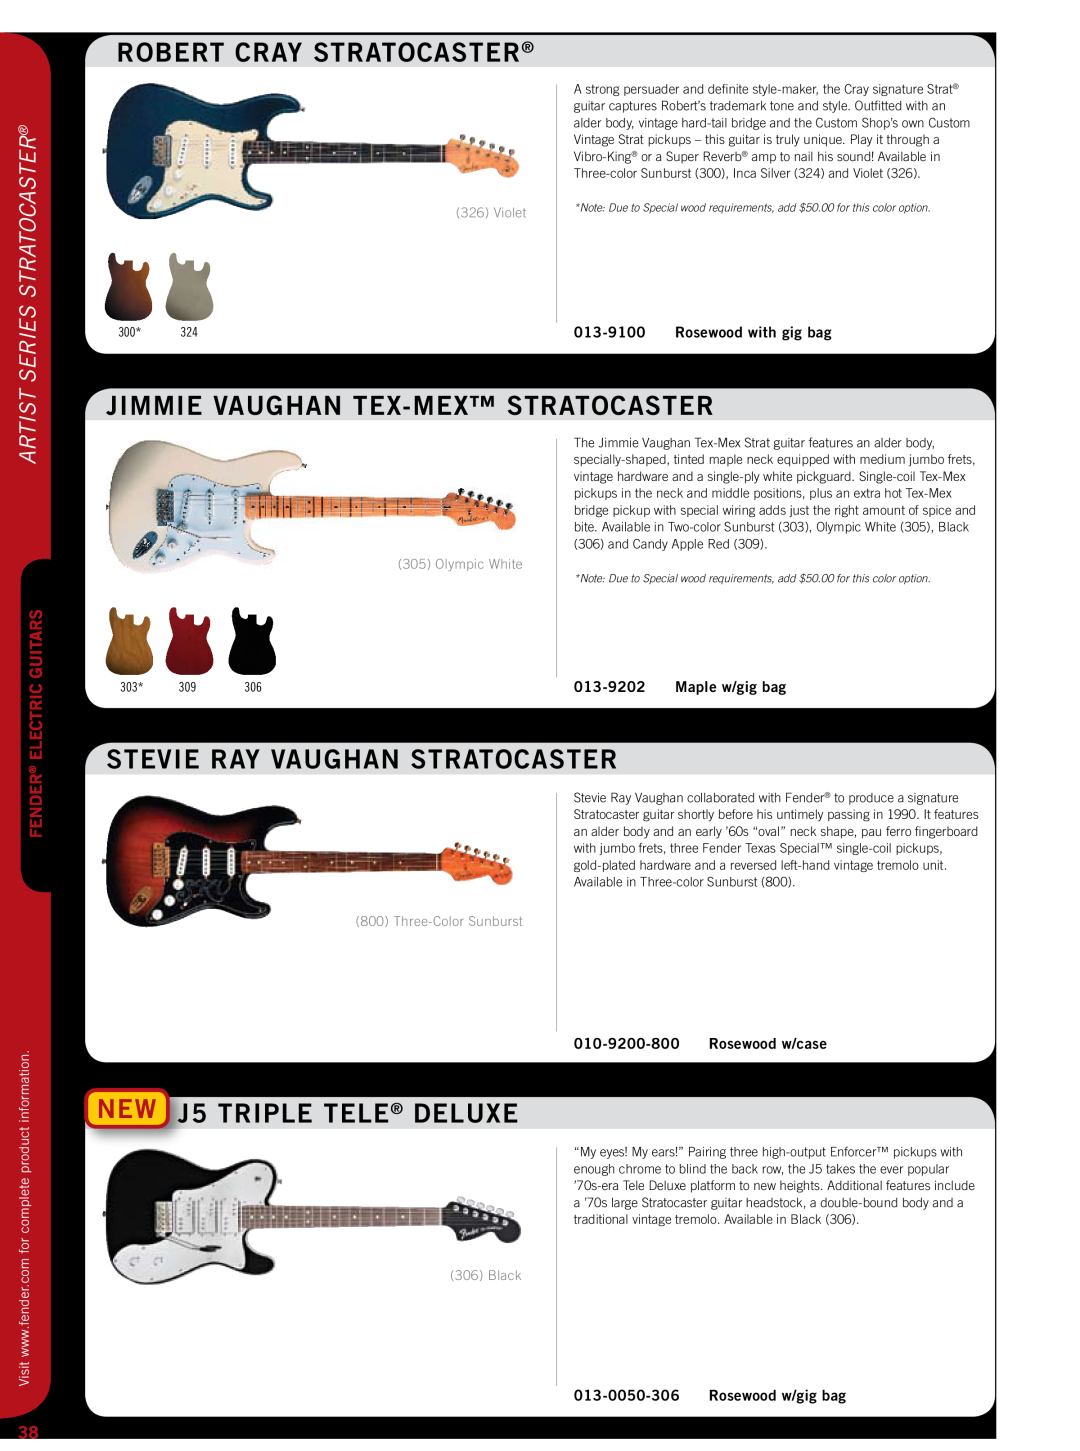 Fender 011-7702 Robert Cray Stratocaster, Jimmie Vaughan Tex-Mex Stratocaster, Stevie Ray Vaughan Stratocaster, 013-9202 